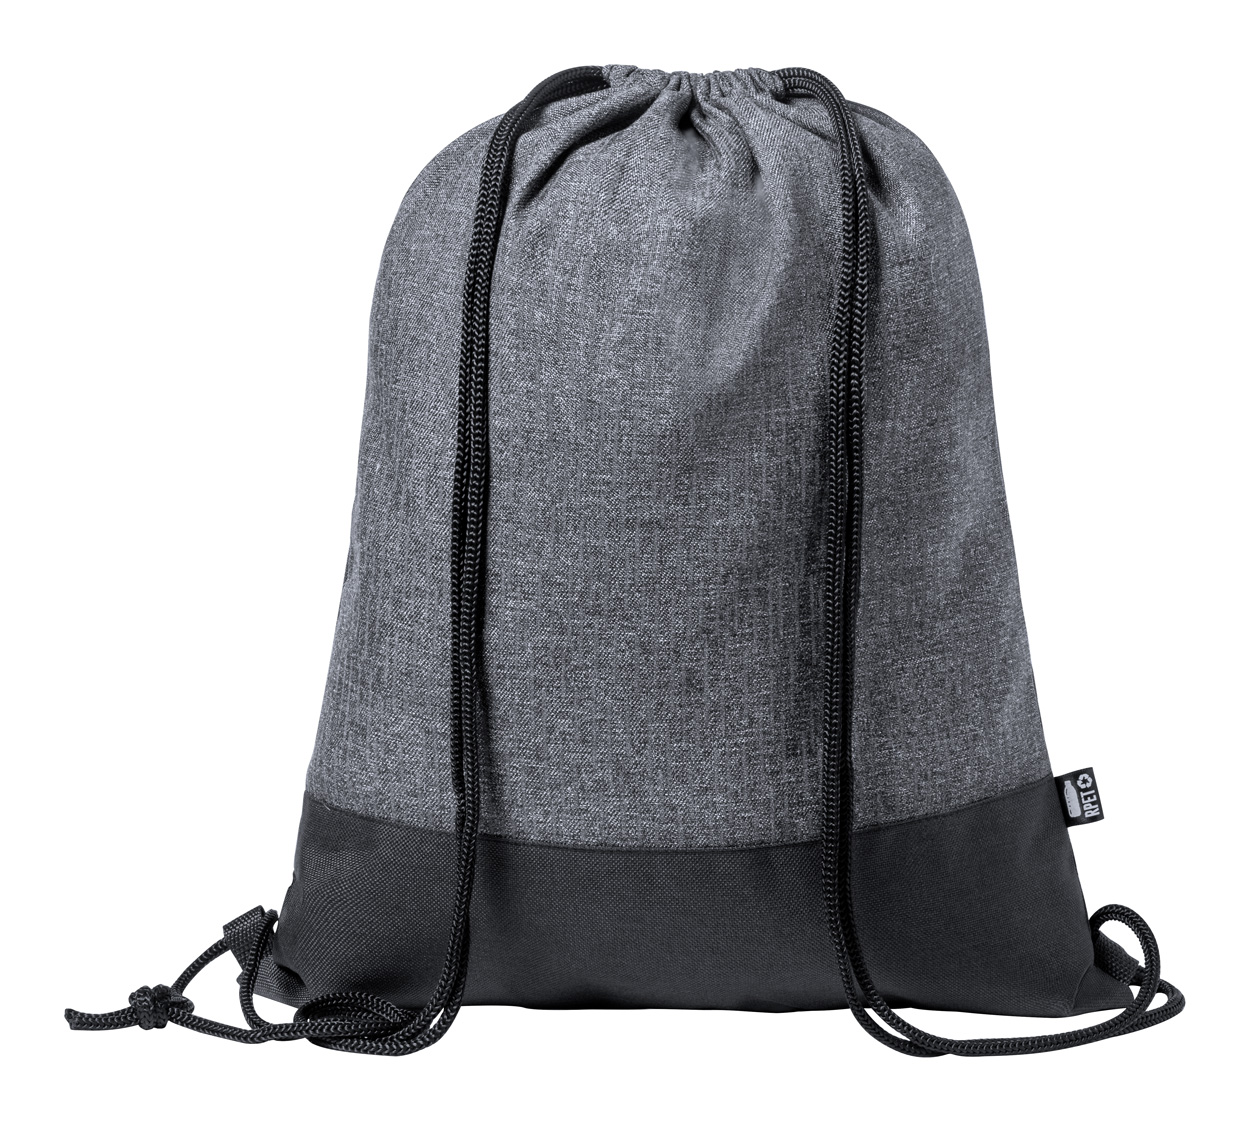 Stabby reflective drawstring bag - grey